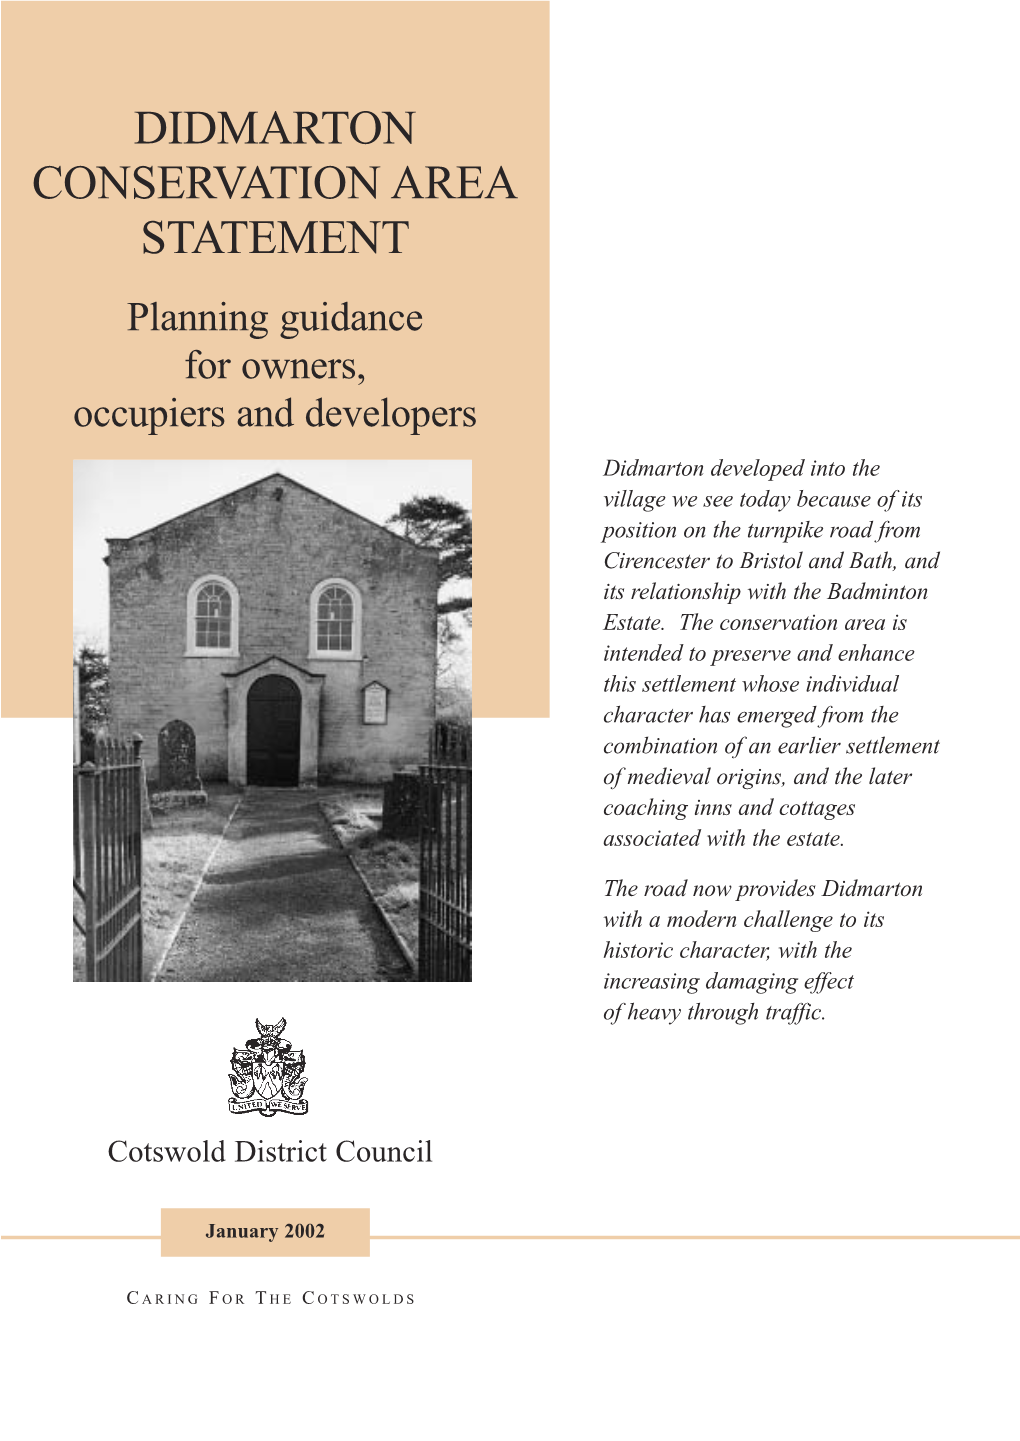 Didmarton Conservation Area Statement